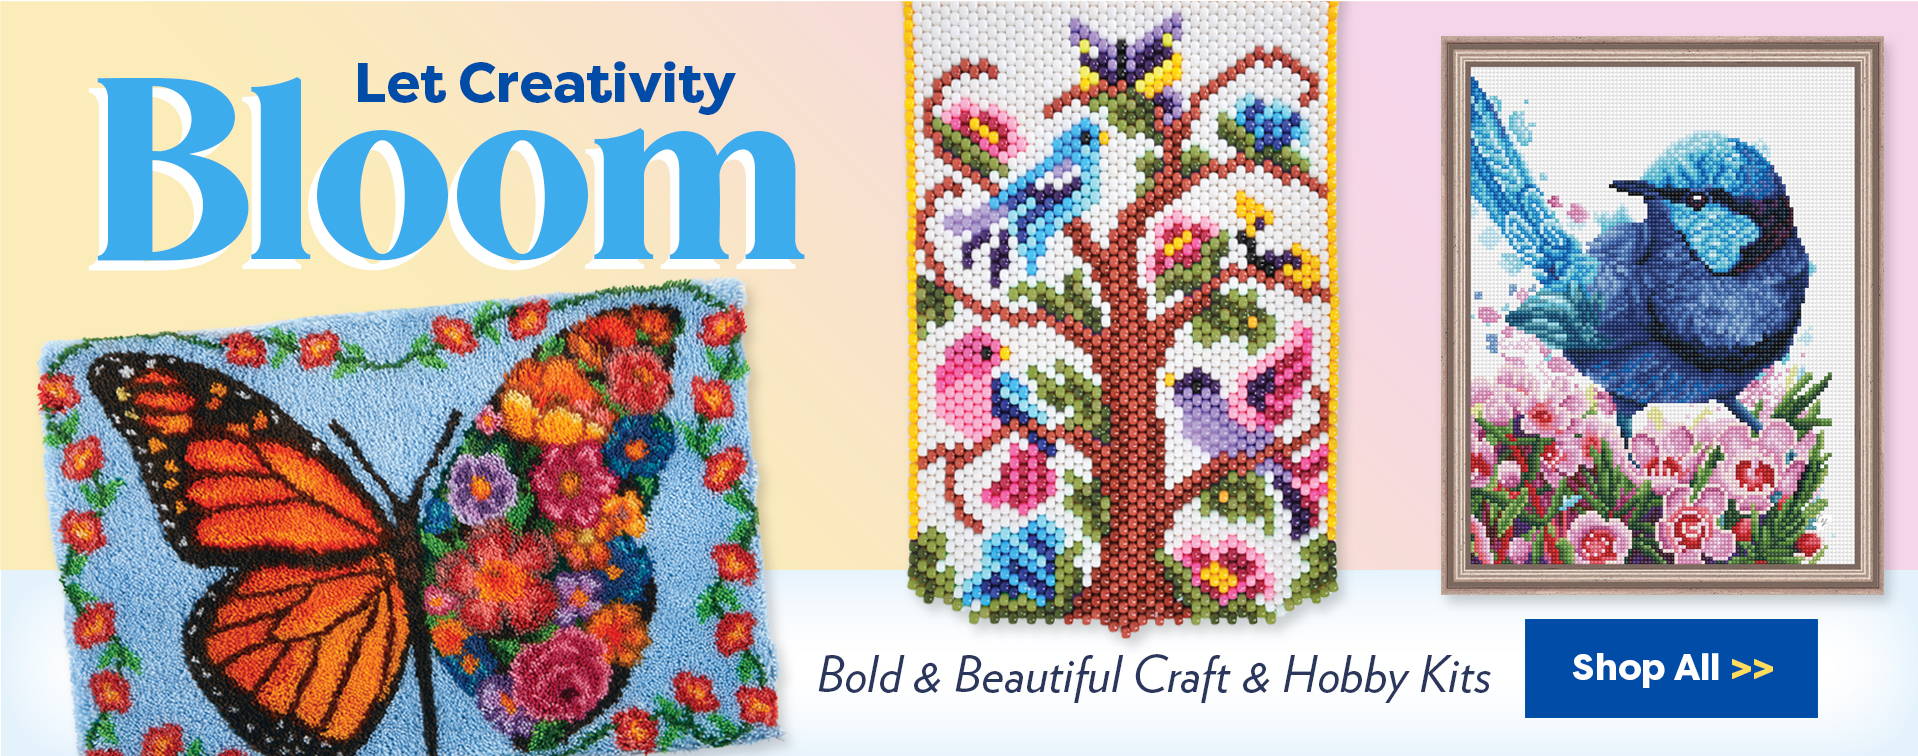 Let Creativity Bloom. Bold & Beautiful Craft & Hobby Kits. 